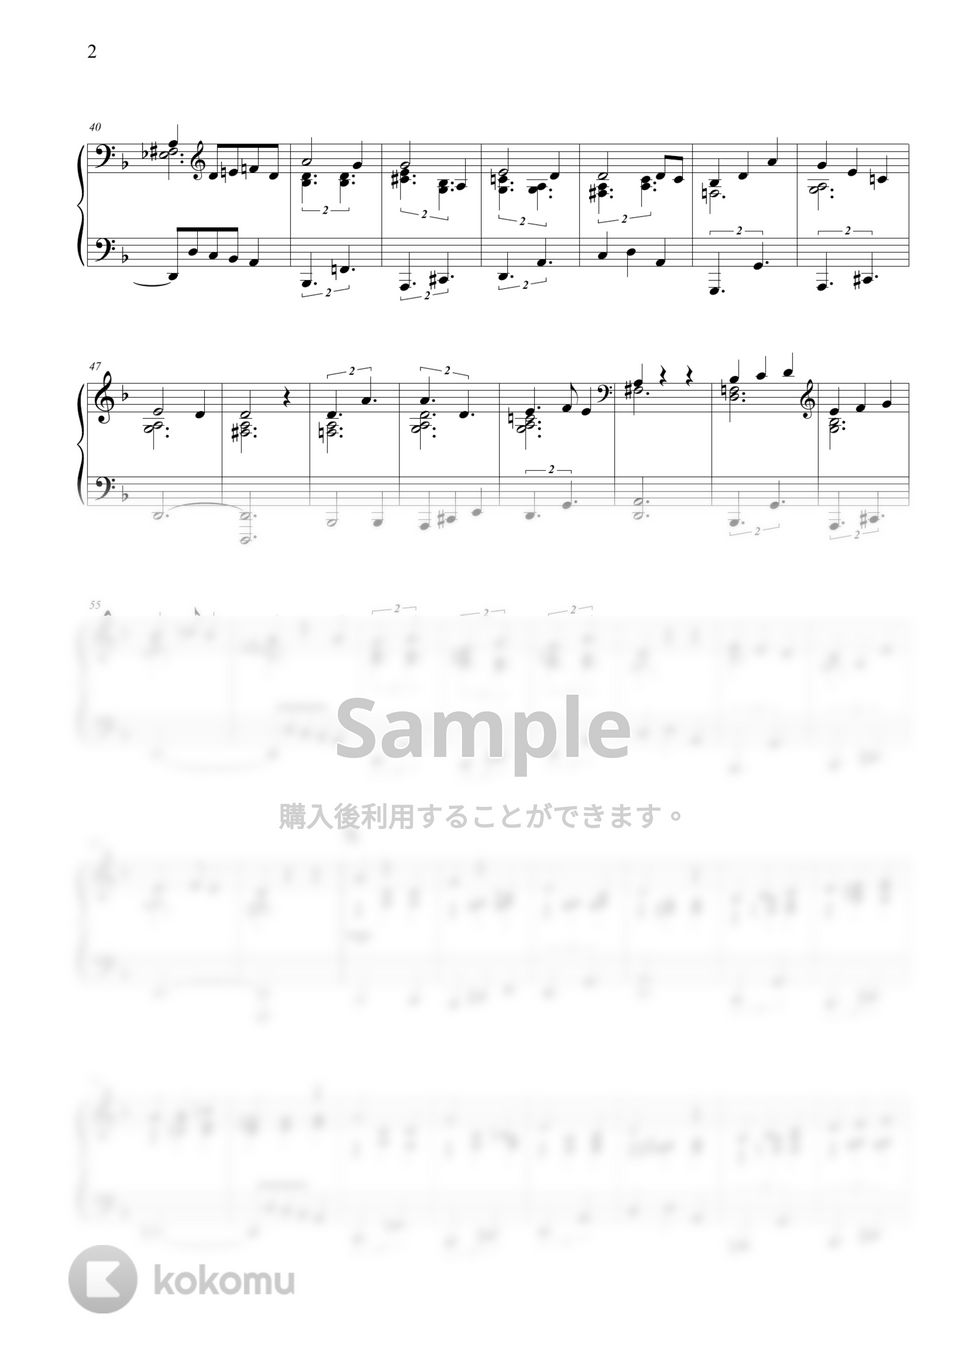 DATEKEN - 蜜月アン・ドゥ・トロワ (2 Versions) by THIS IS PIANO